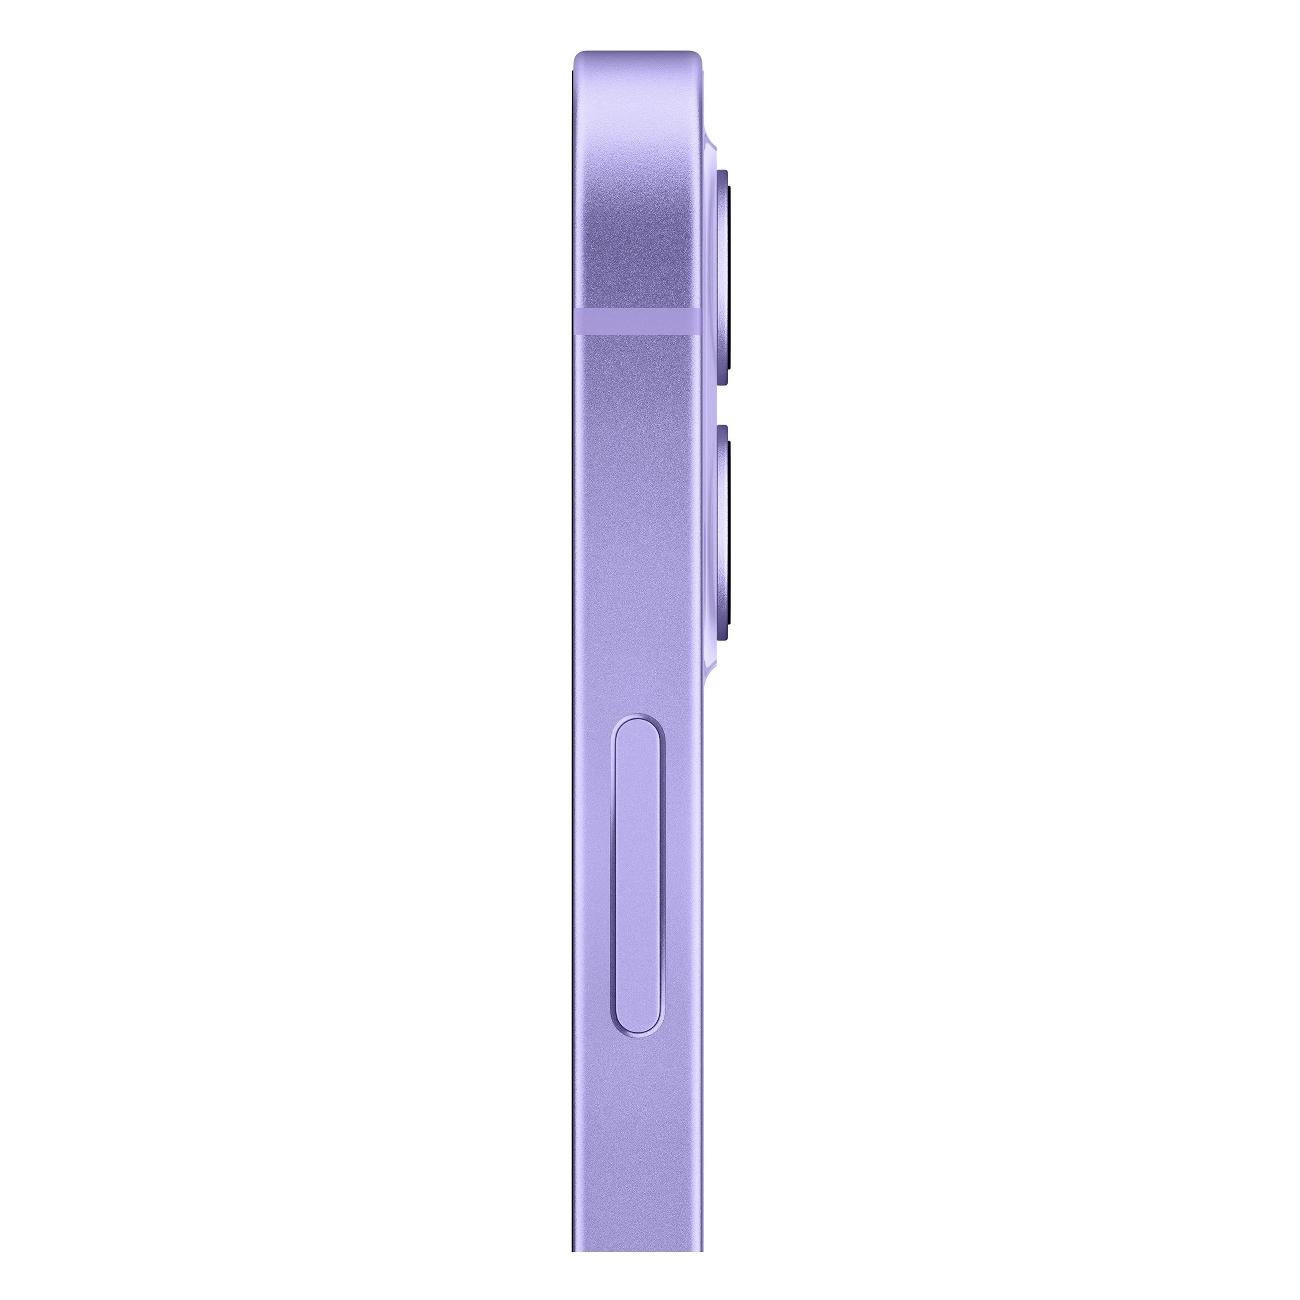 Смартфон Apple iPhone 12 64GB Purple (MJNE3LL/A) - купить смартфон Эпл iPhone  12 64GB Purple (MJNE3LL/A), цены в интернет-магазине Эльдорадо в Москве,  доставка по РФ